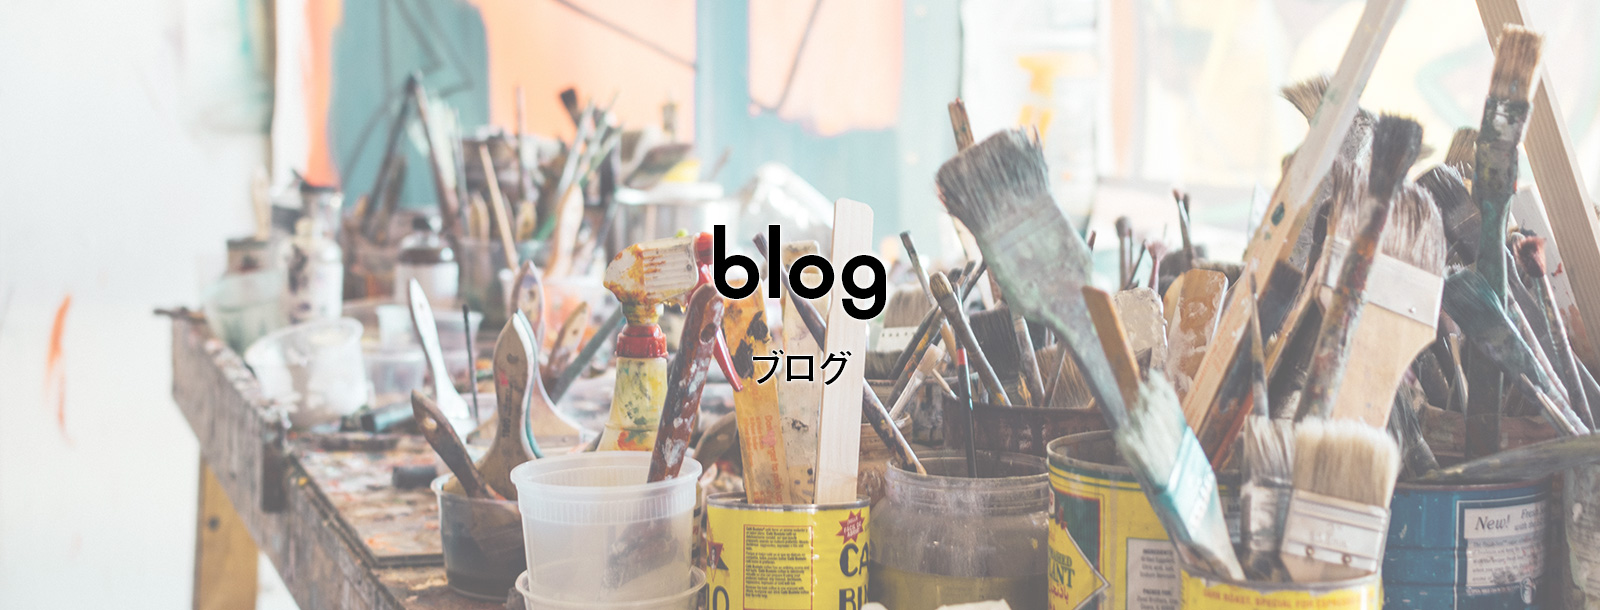 blogブログ